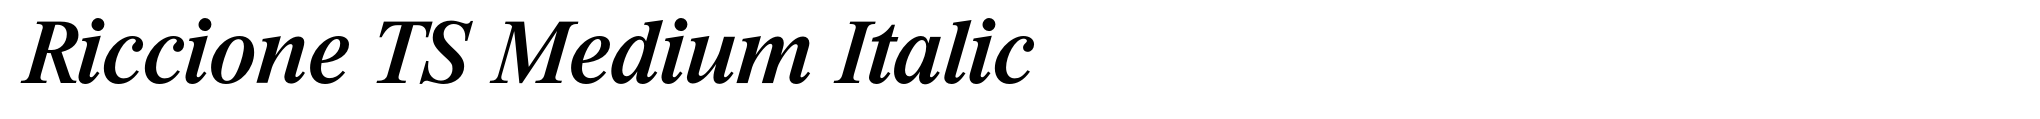 Riccione TS Medium Italic image